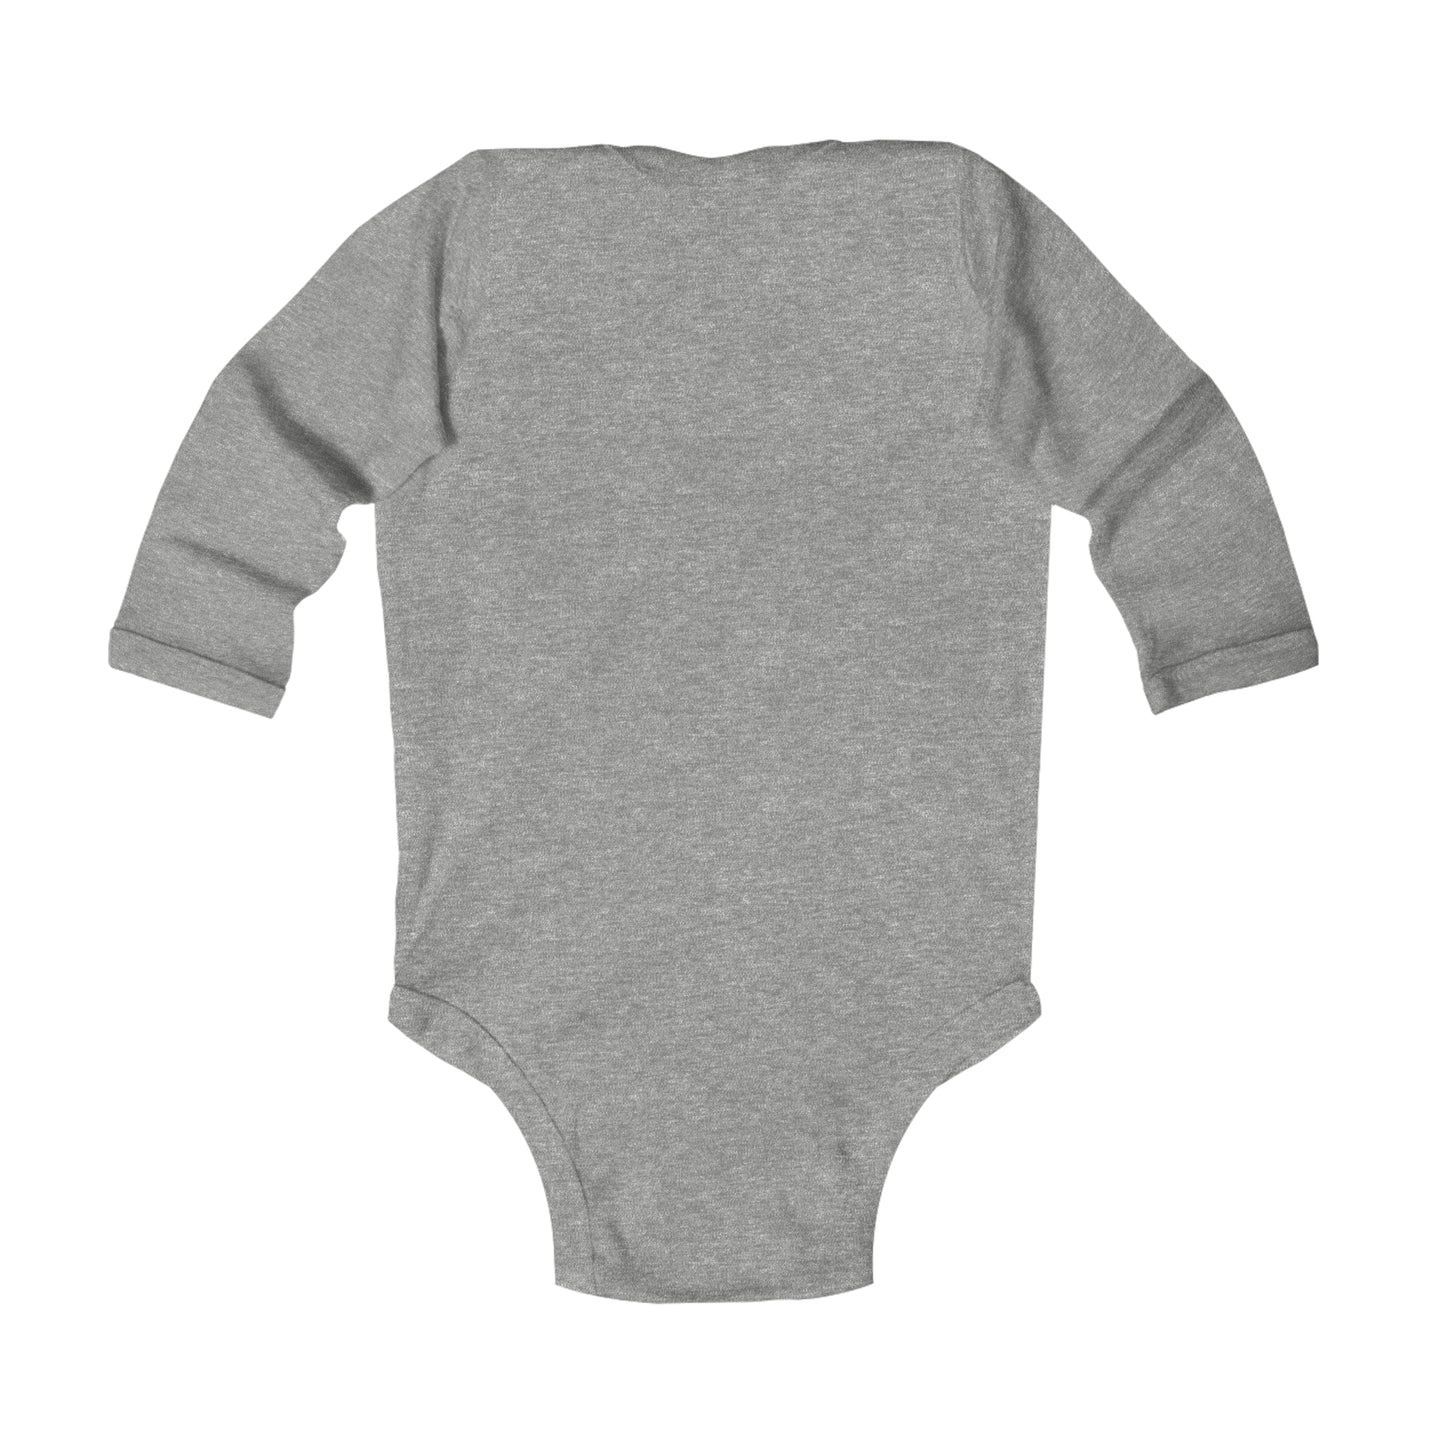 Infant Long Sleeve Bodysuit, by MaJk Turtle Designs (100% Cotton)